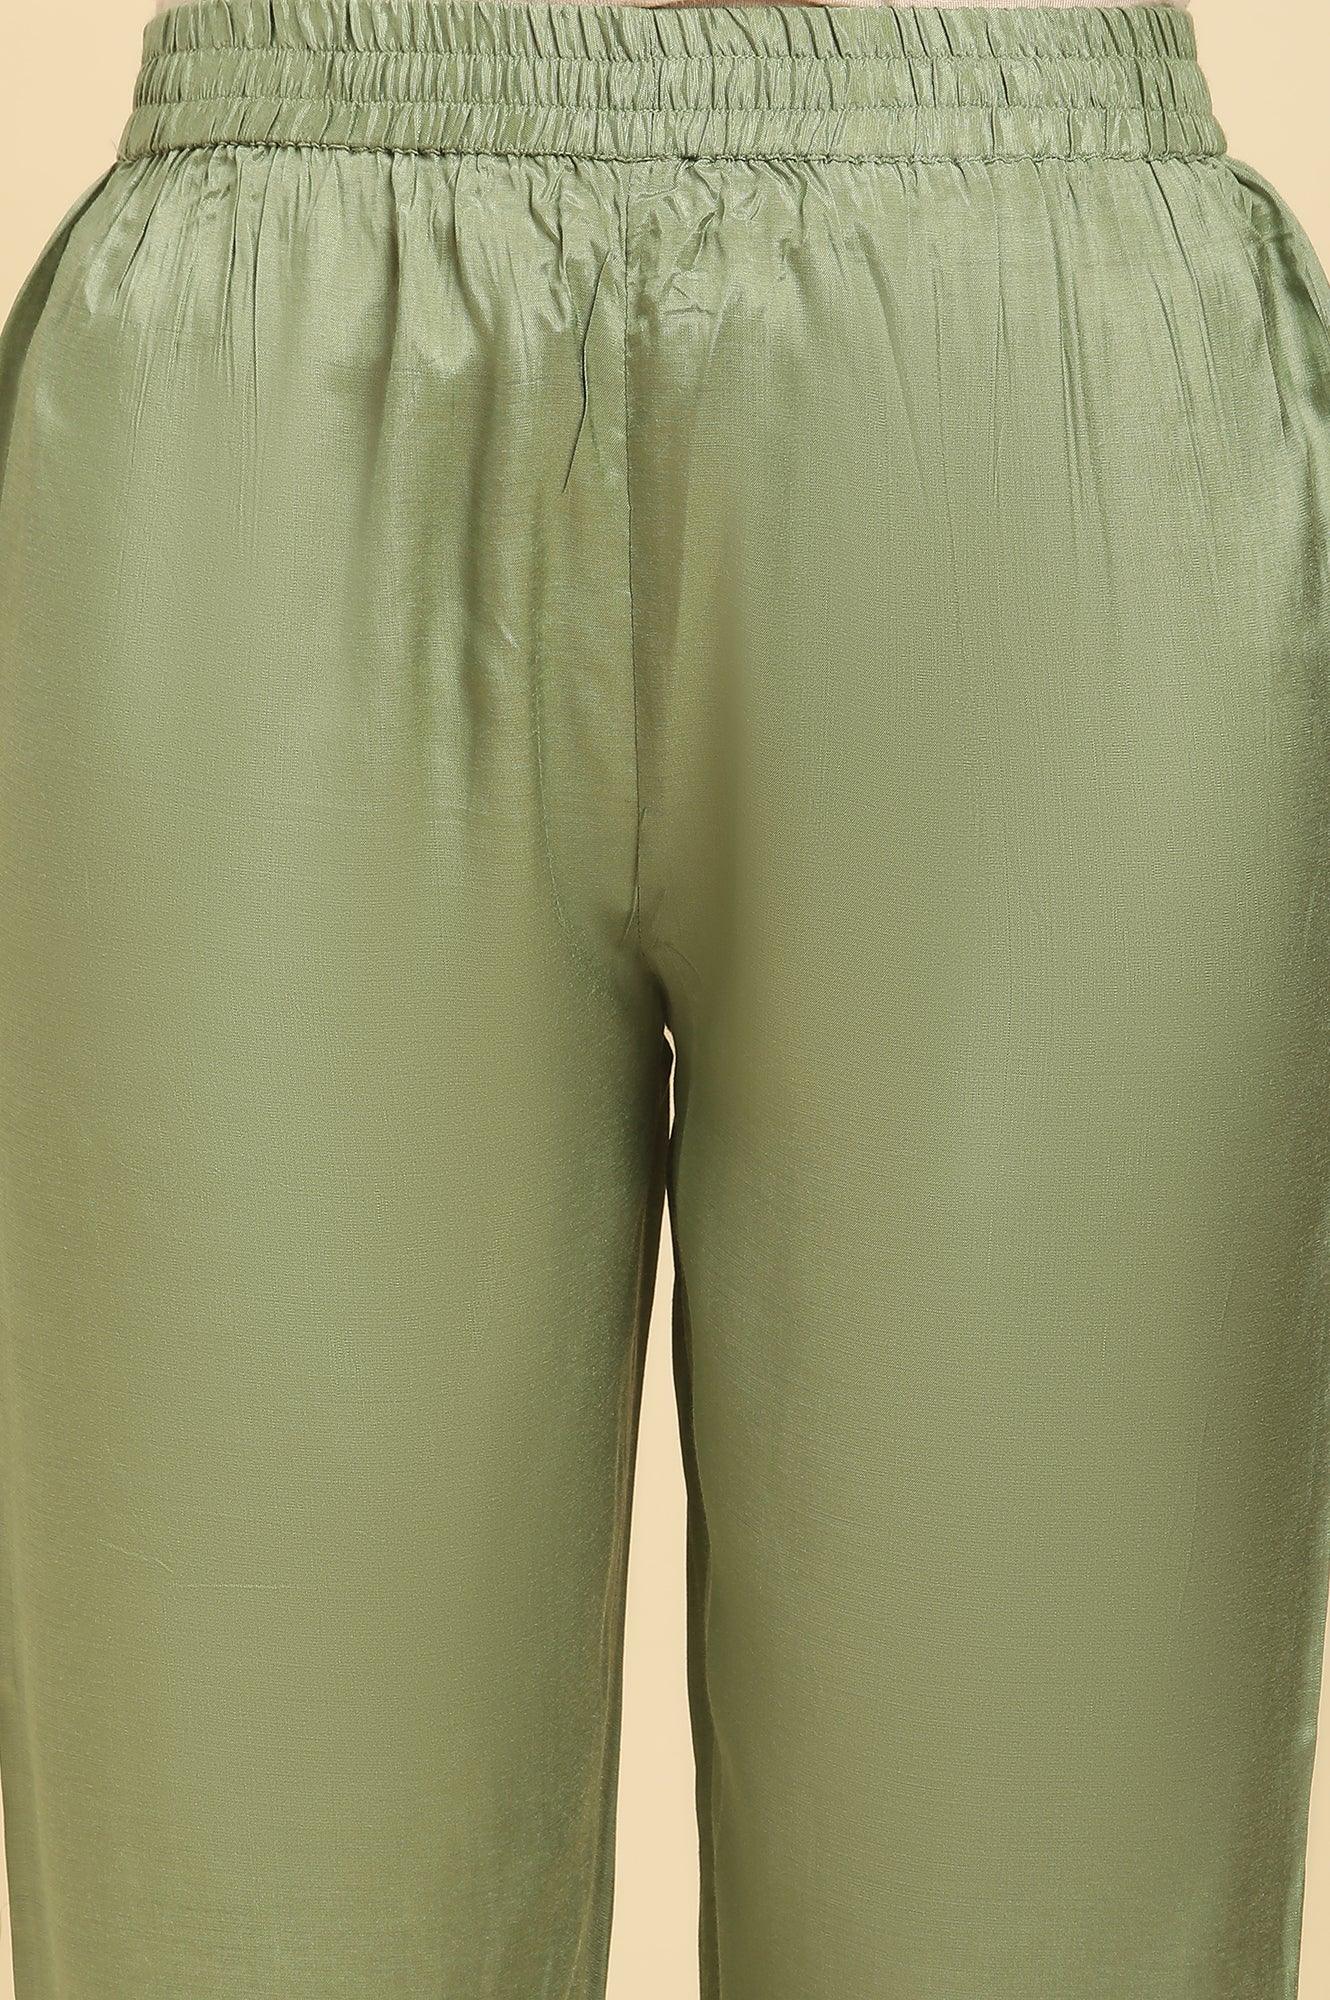 Green Embellished Shantung Kurta, Pants And Dupatta Set - wforwoman